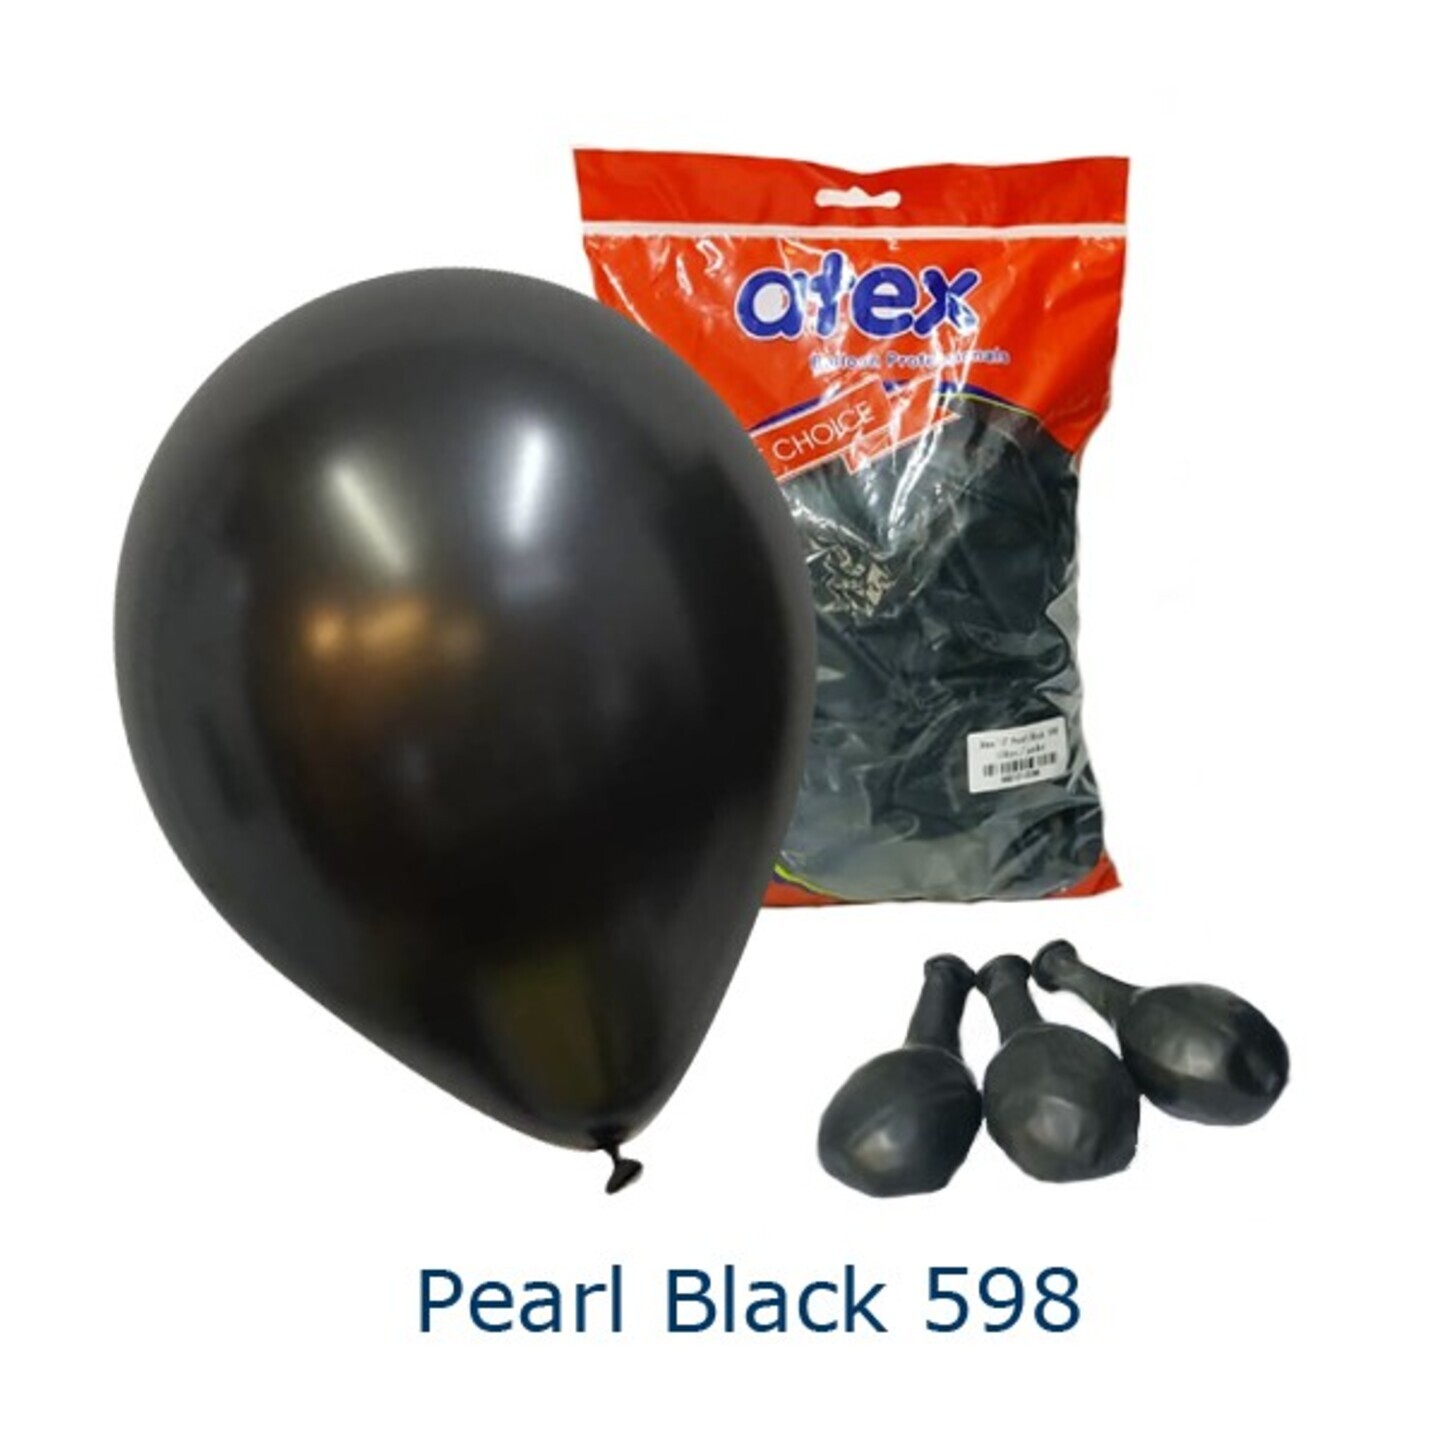 Pearl Black 598